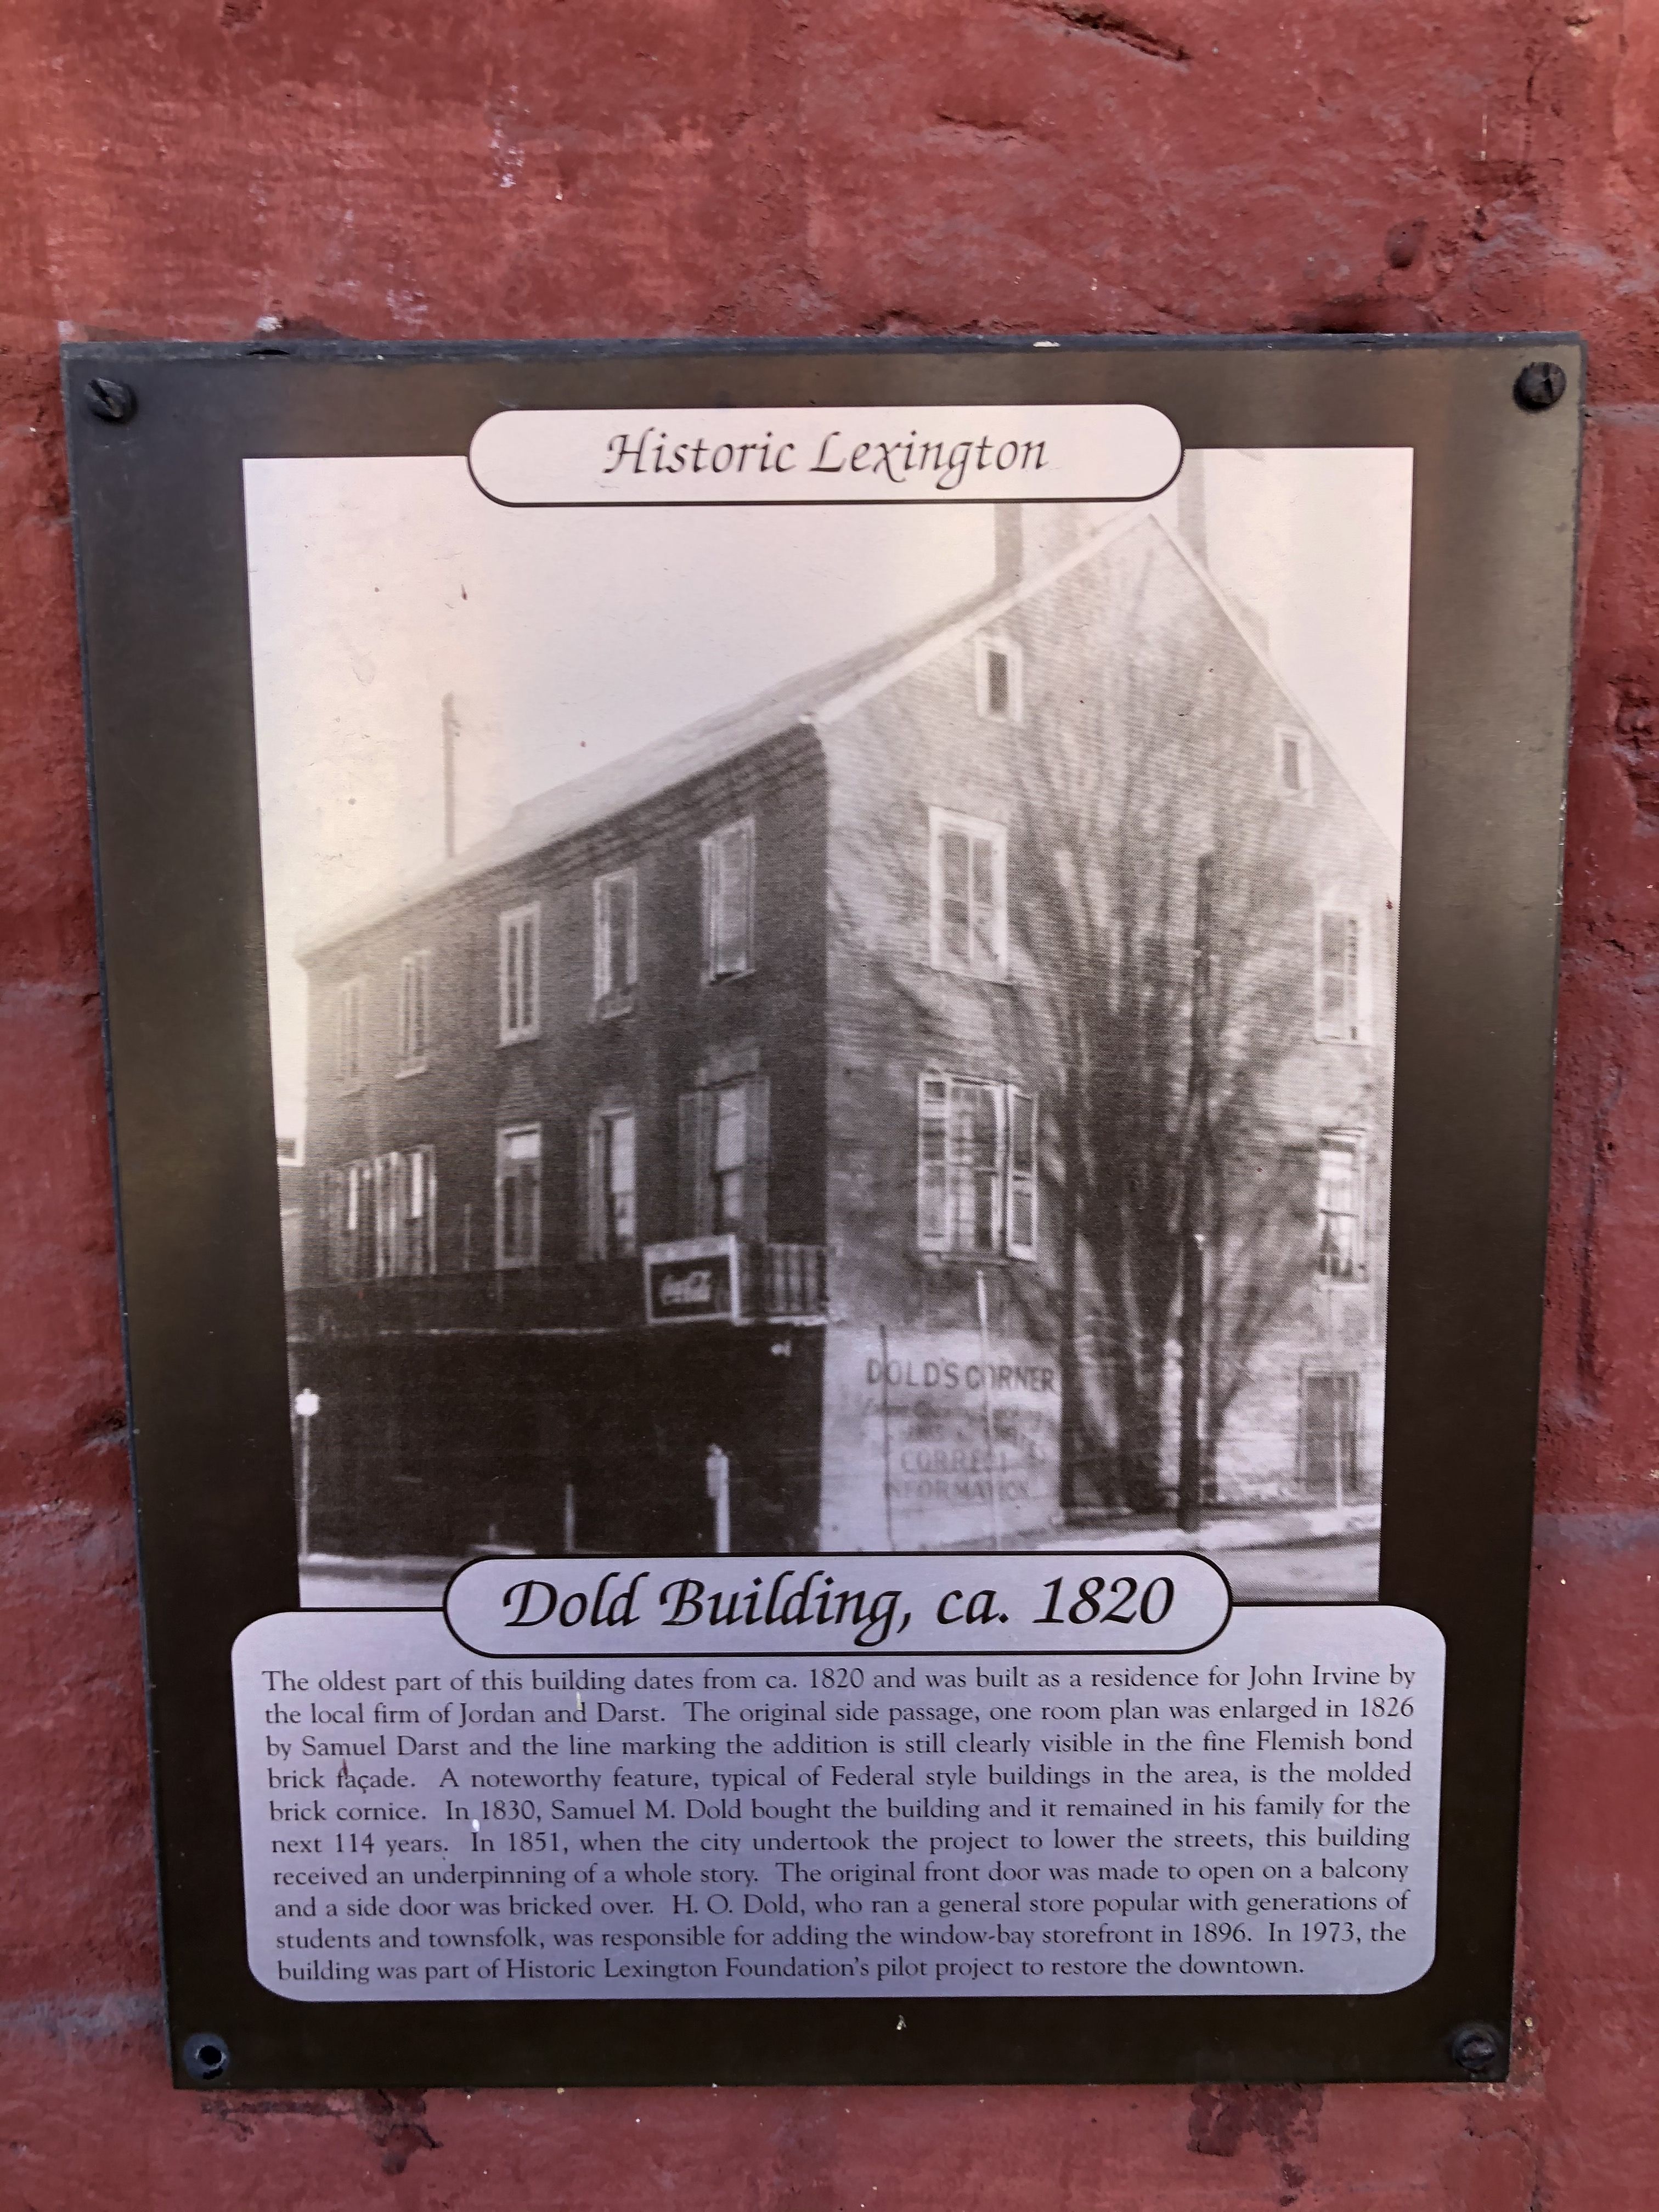 Dold Building, ca. 1820 Marker